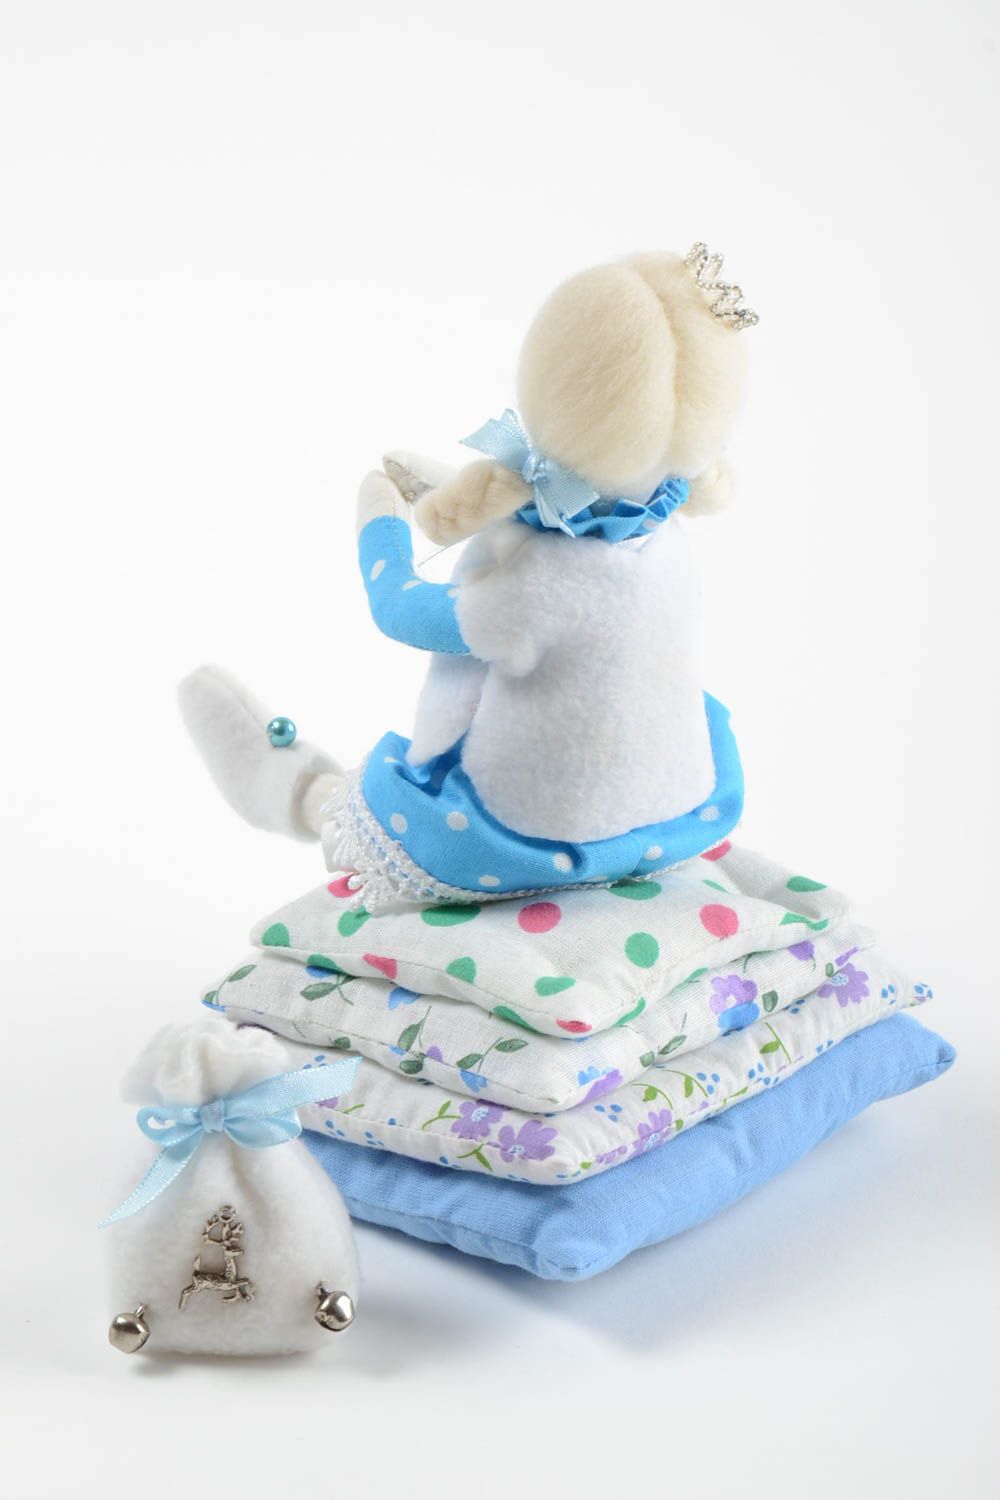 Nice handmade rag doll homemade fabric soft toy birthday gift ideas photo 4